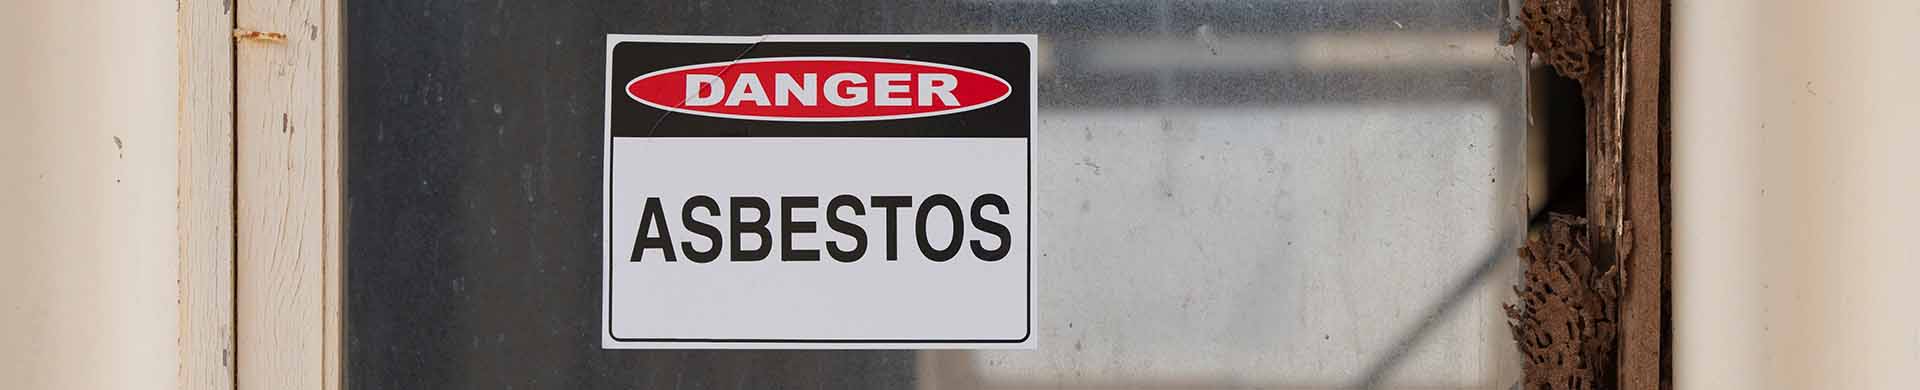 Asbestos Danger Sign on Window With Broken Sill